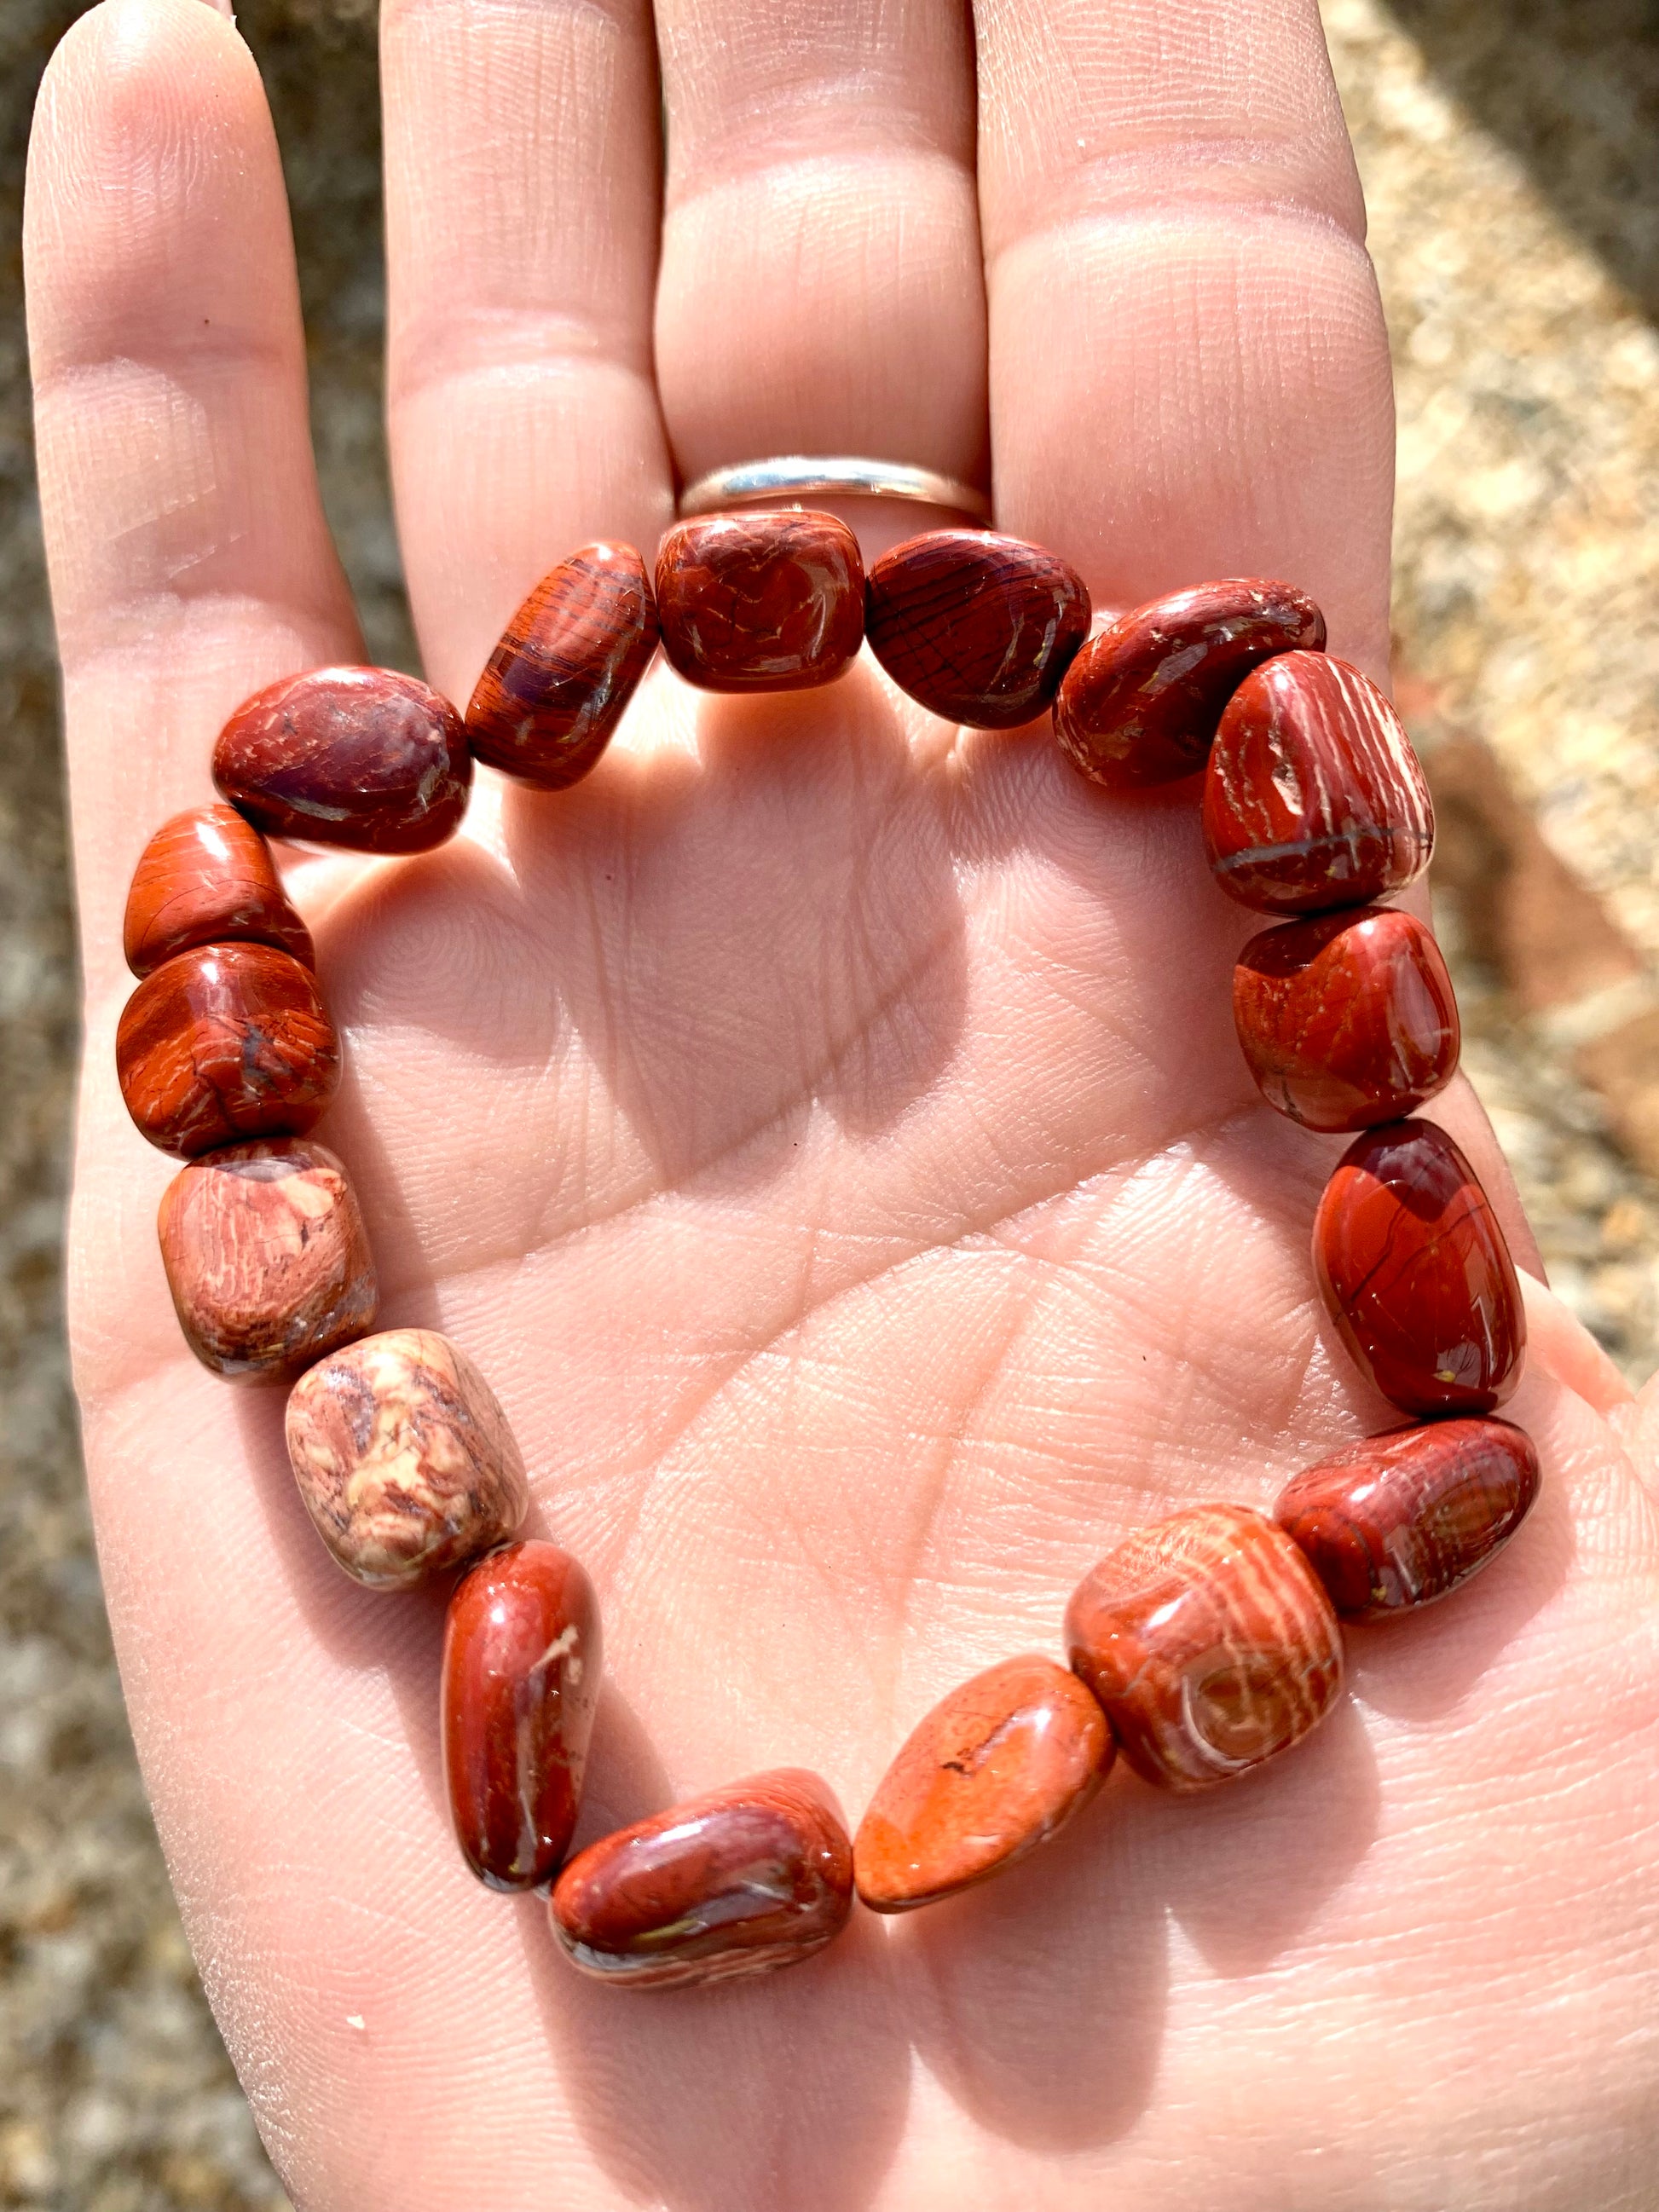 Red Jasper Tumblestone Crystal Healing Bracelets